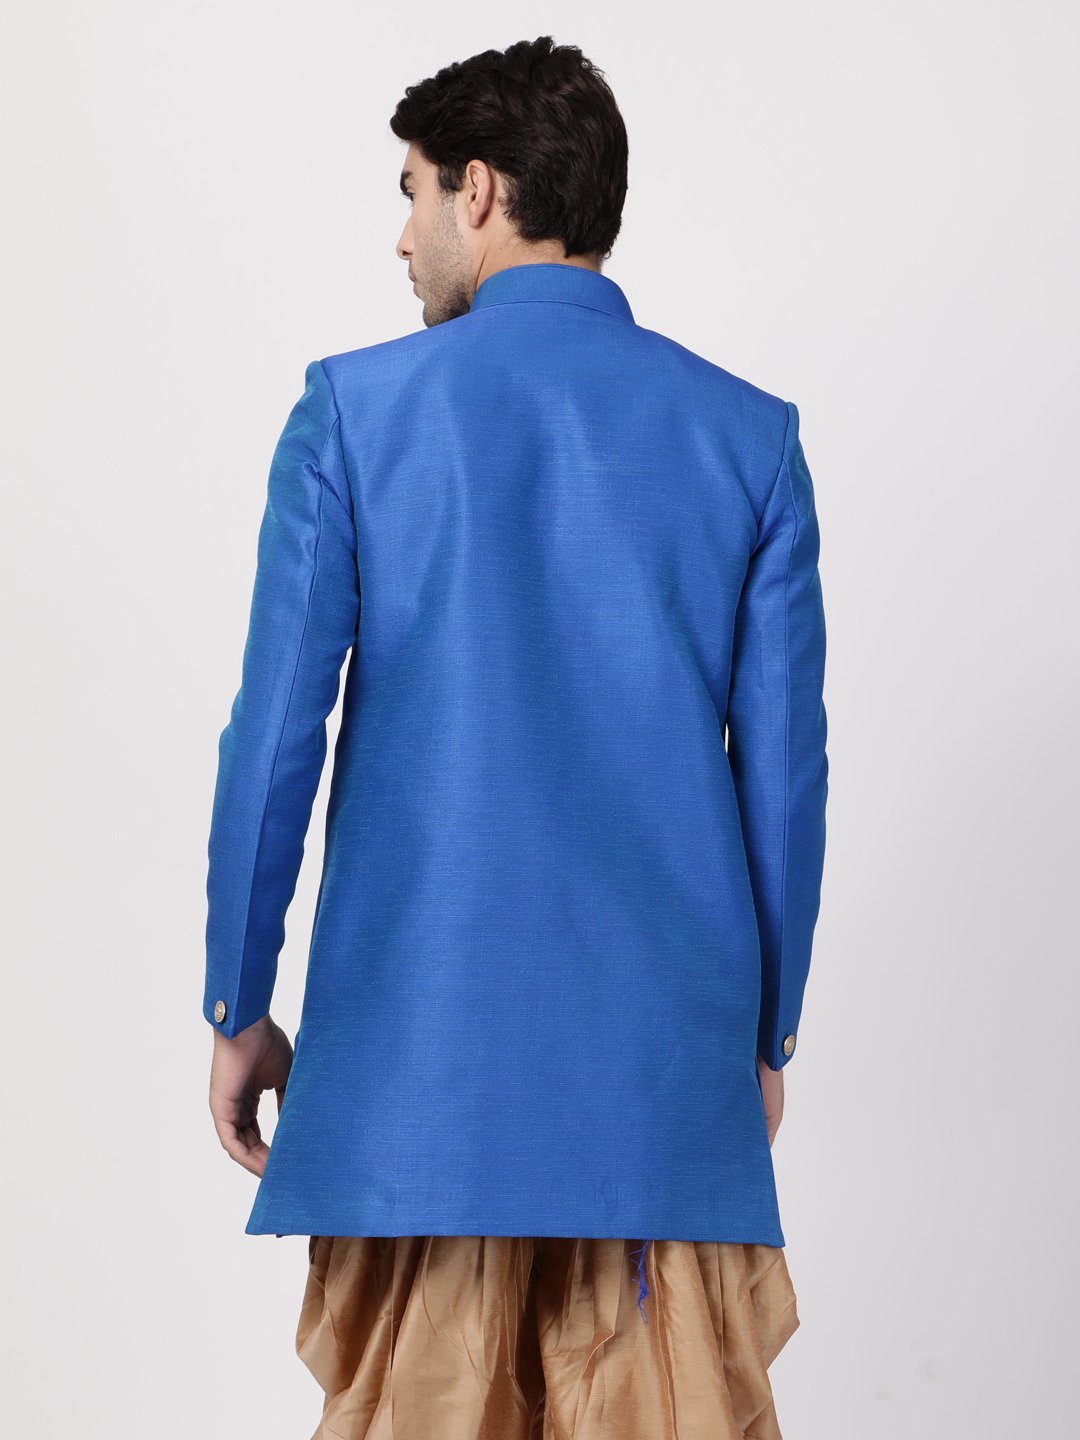 Men's Blue Silk Blend Sherwani Only Top